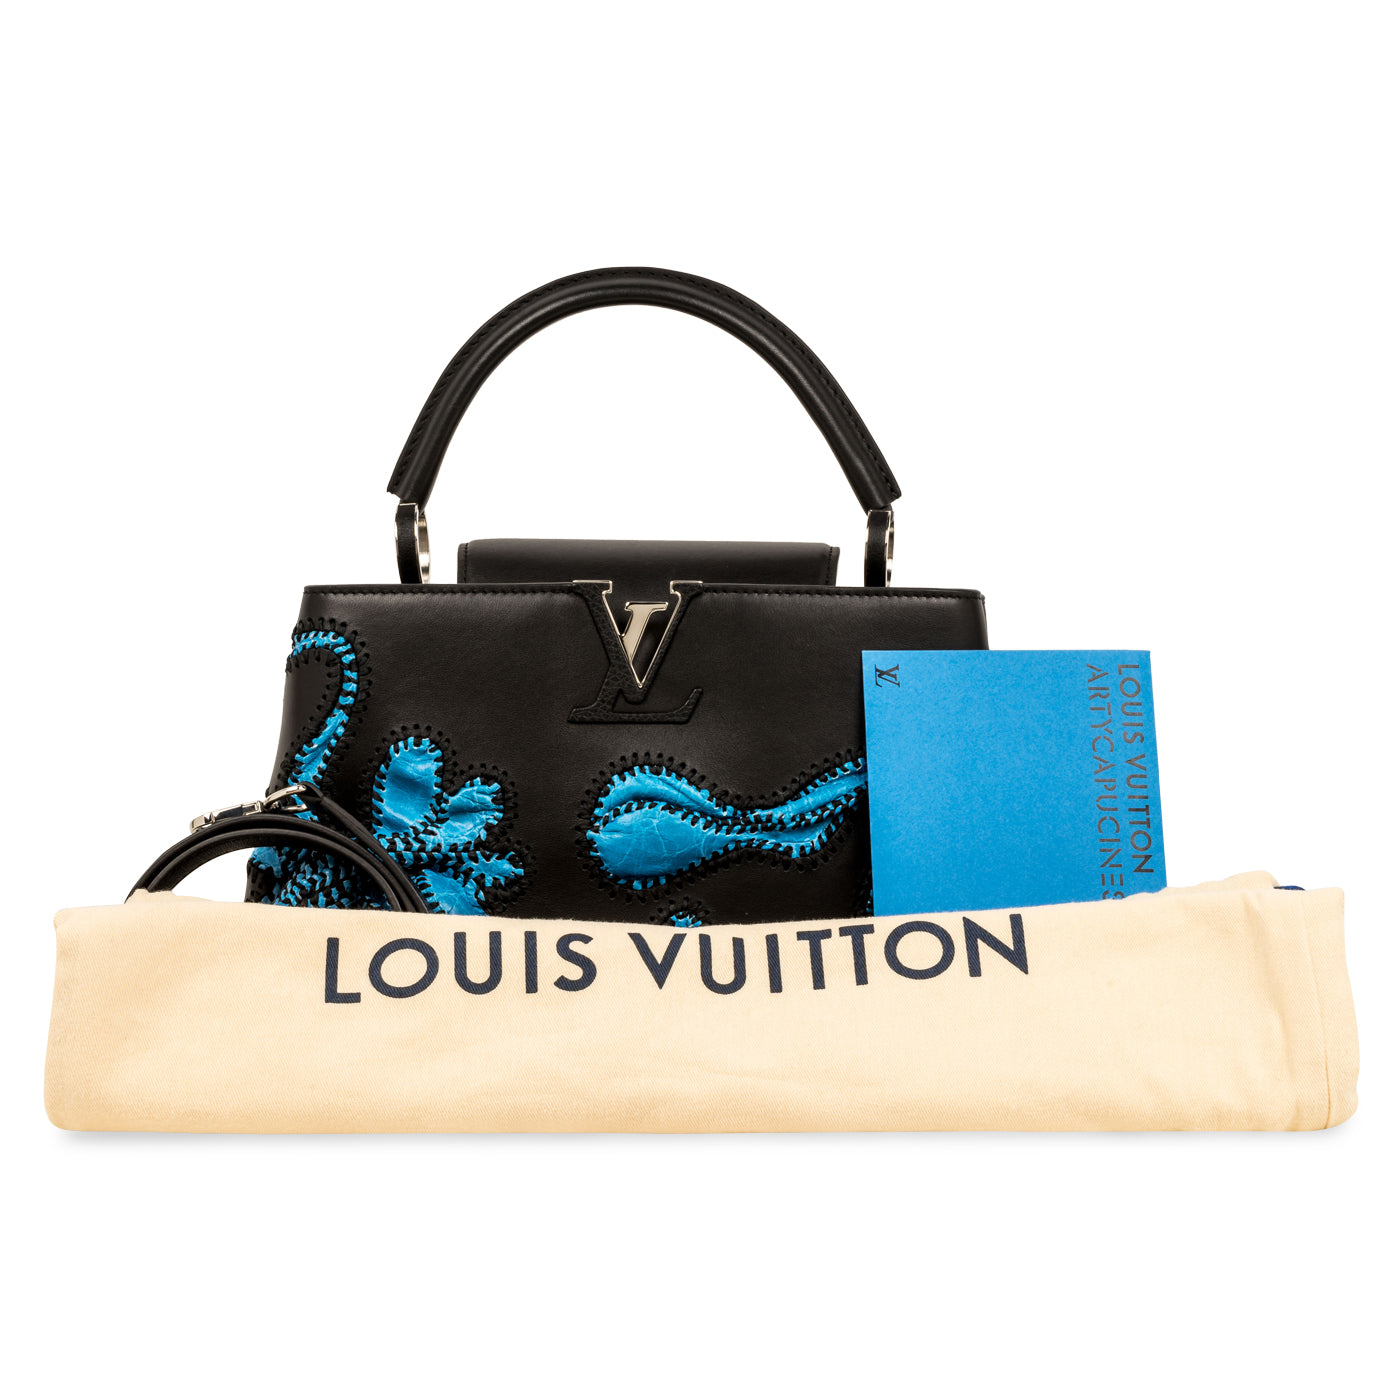 Louis Vuitton ArtyCapucines Nicholas Hlobo PM Black/Blue